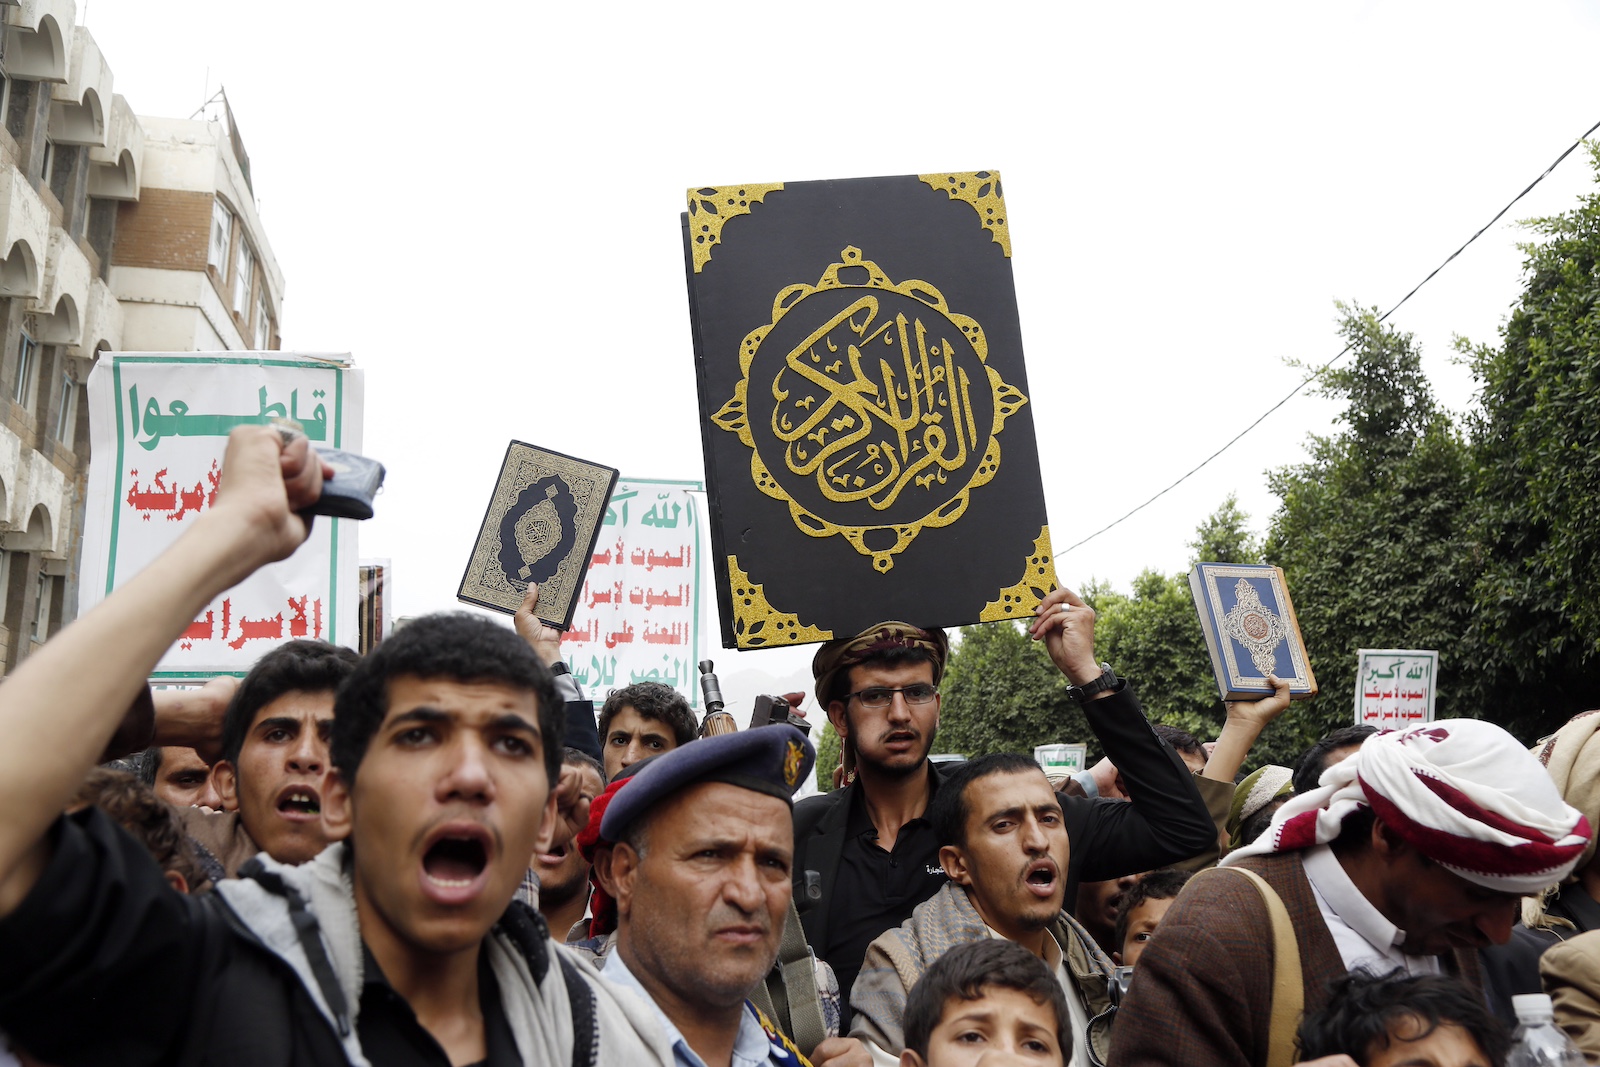 yemen denouncing the burning Quran in Sweden and Denmark